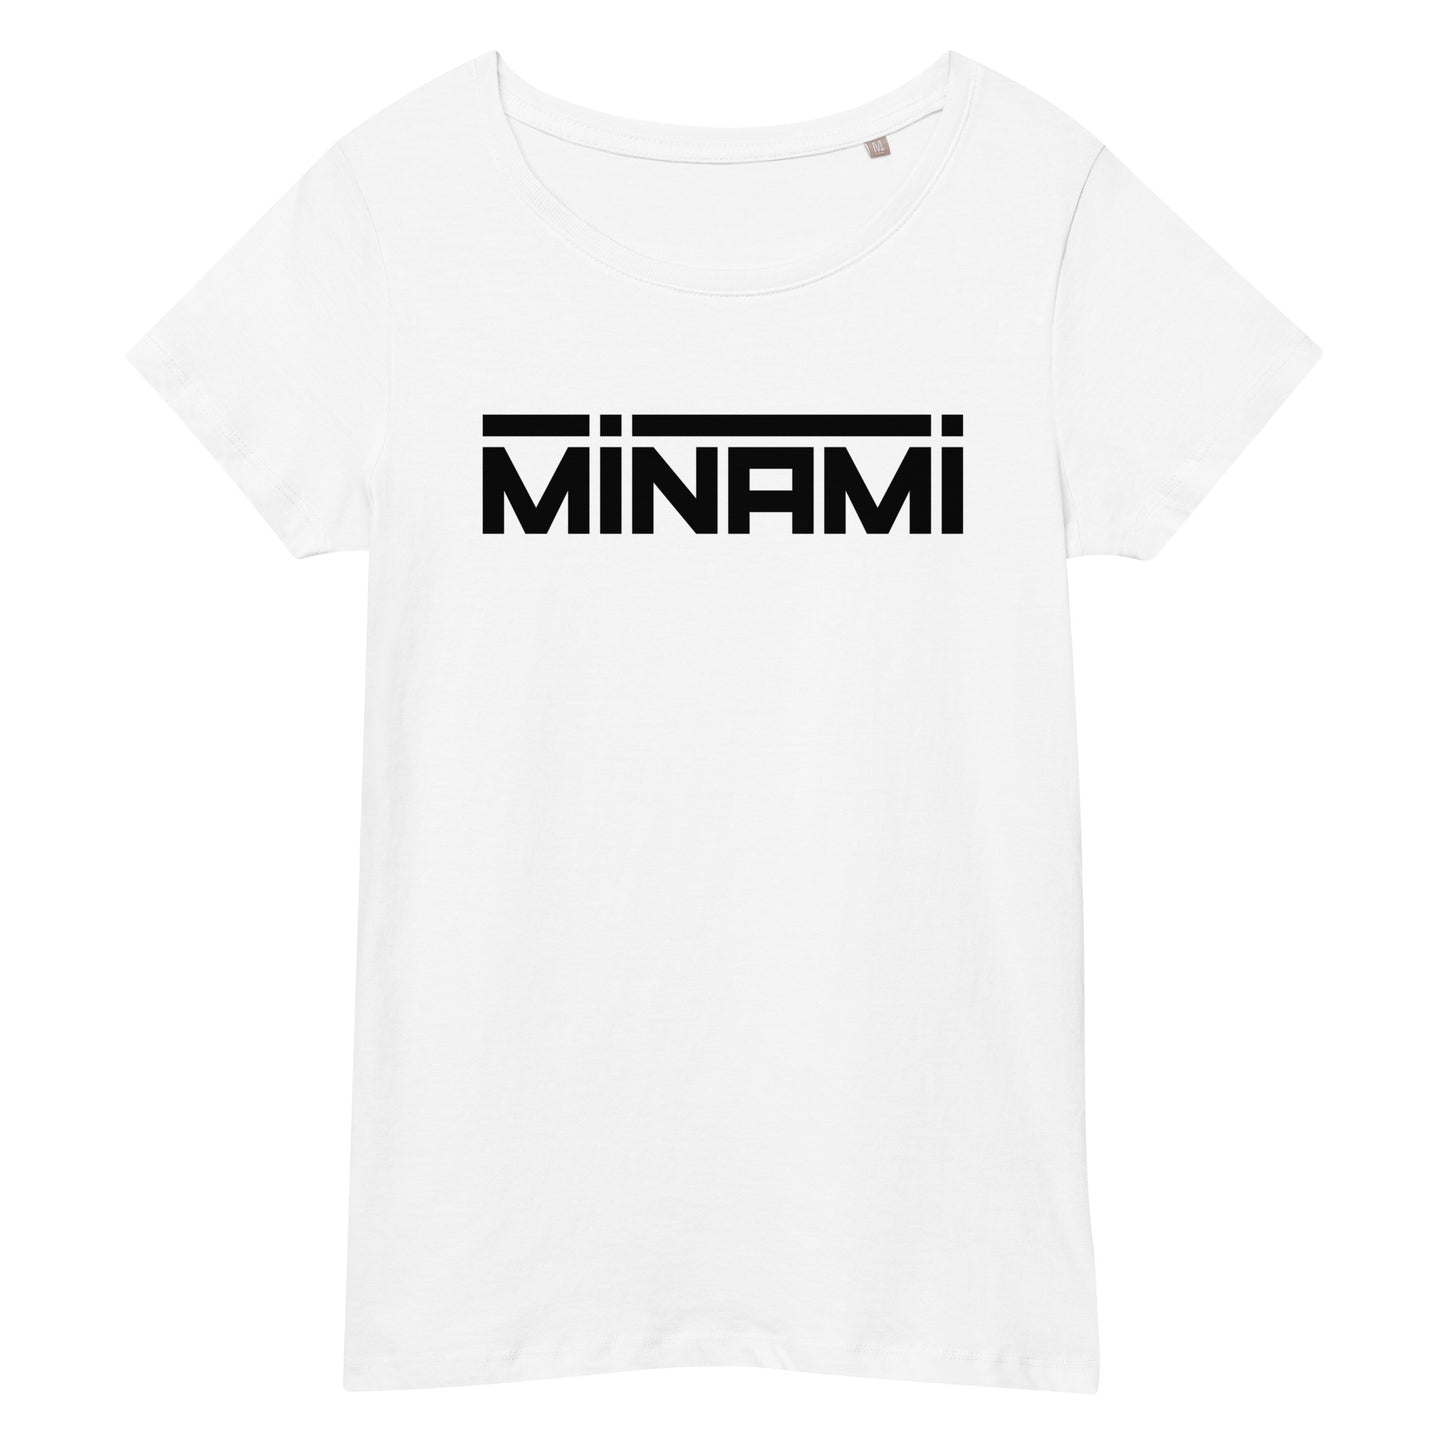 Minami Pop Rock Band Women's Organic T-Shirt White